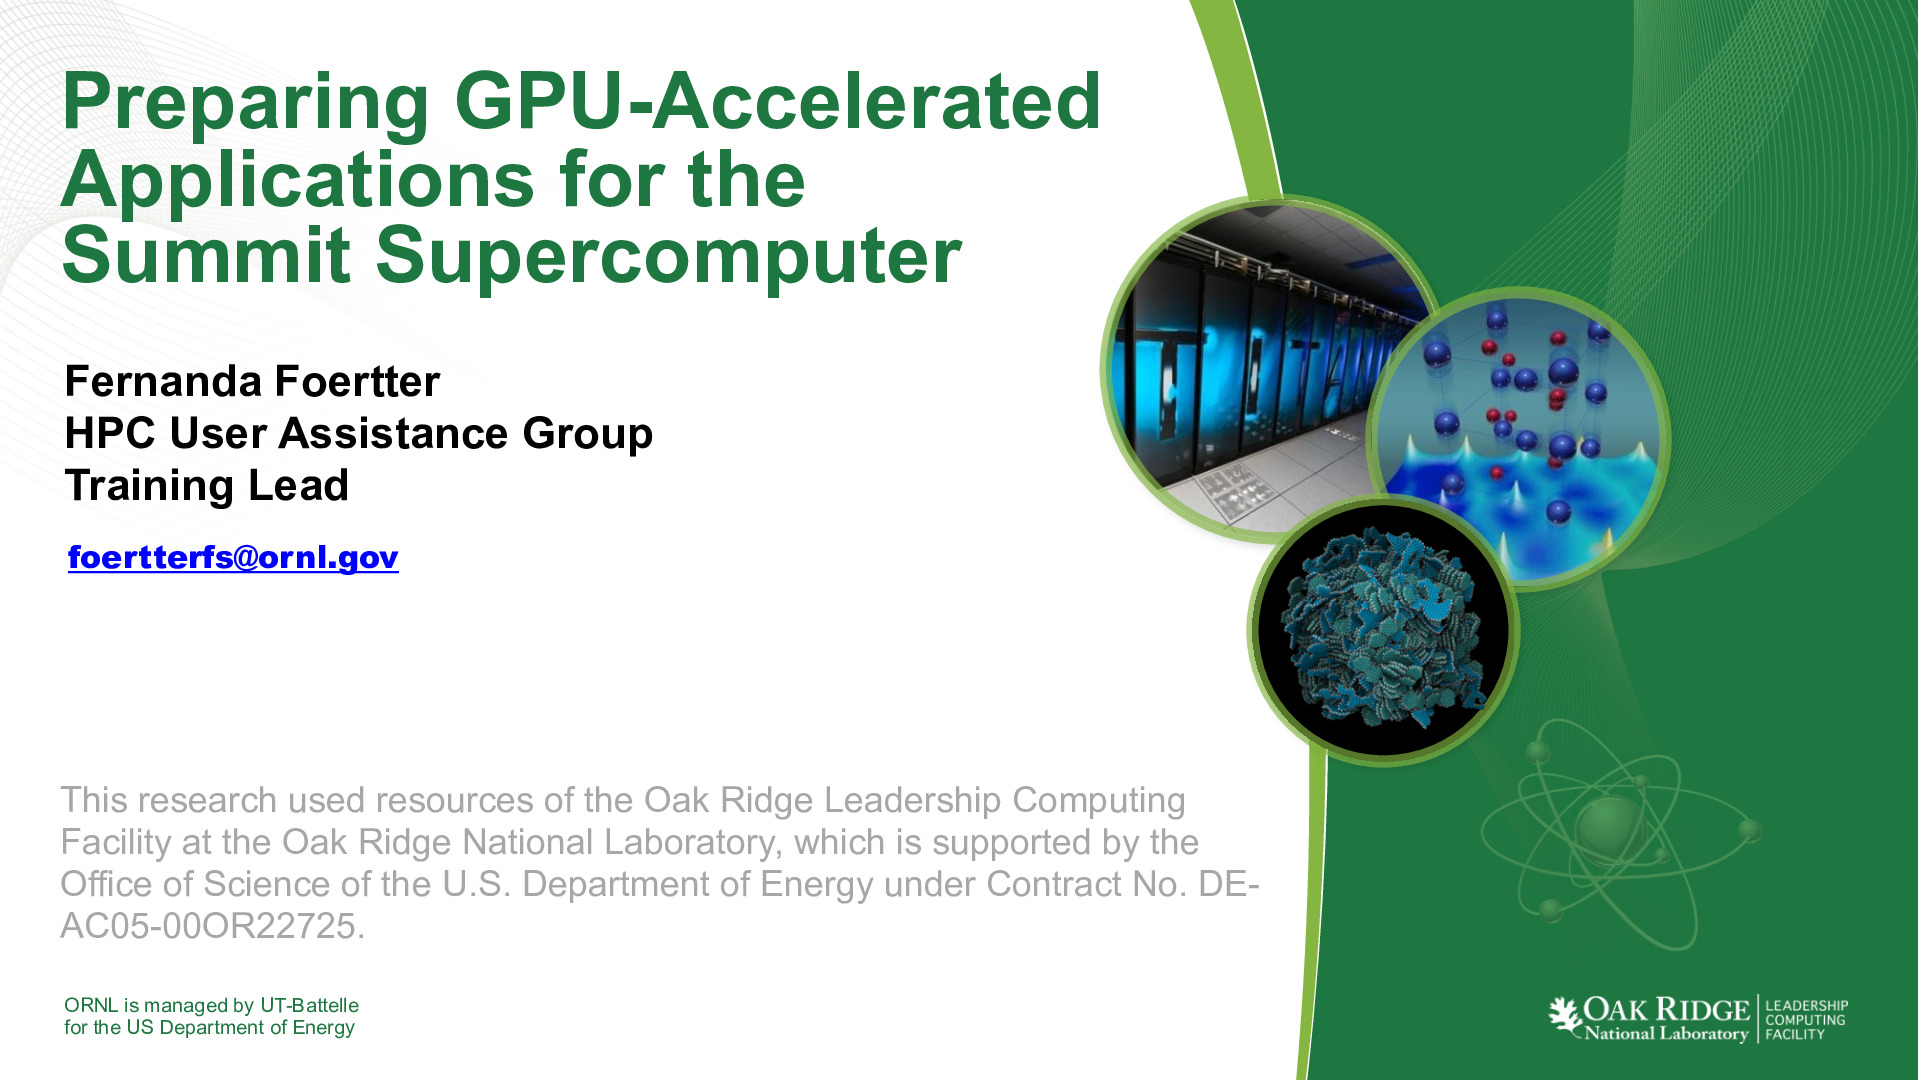 s7642-fernanda-foertter-preparing-gpu-accelerated-app-for-summit-supercomputer